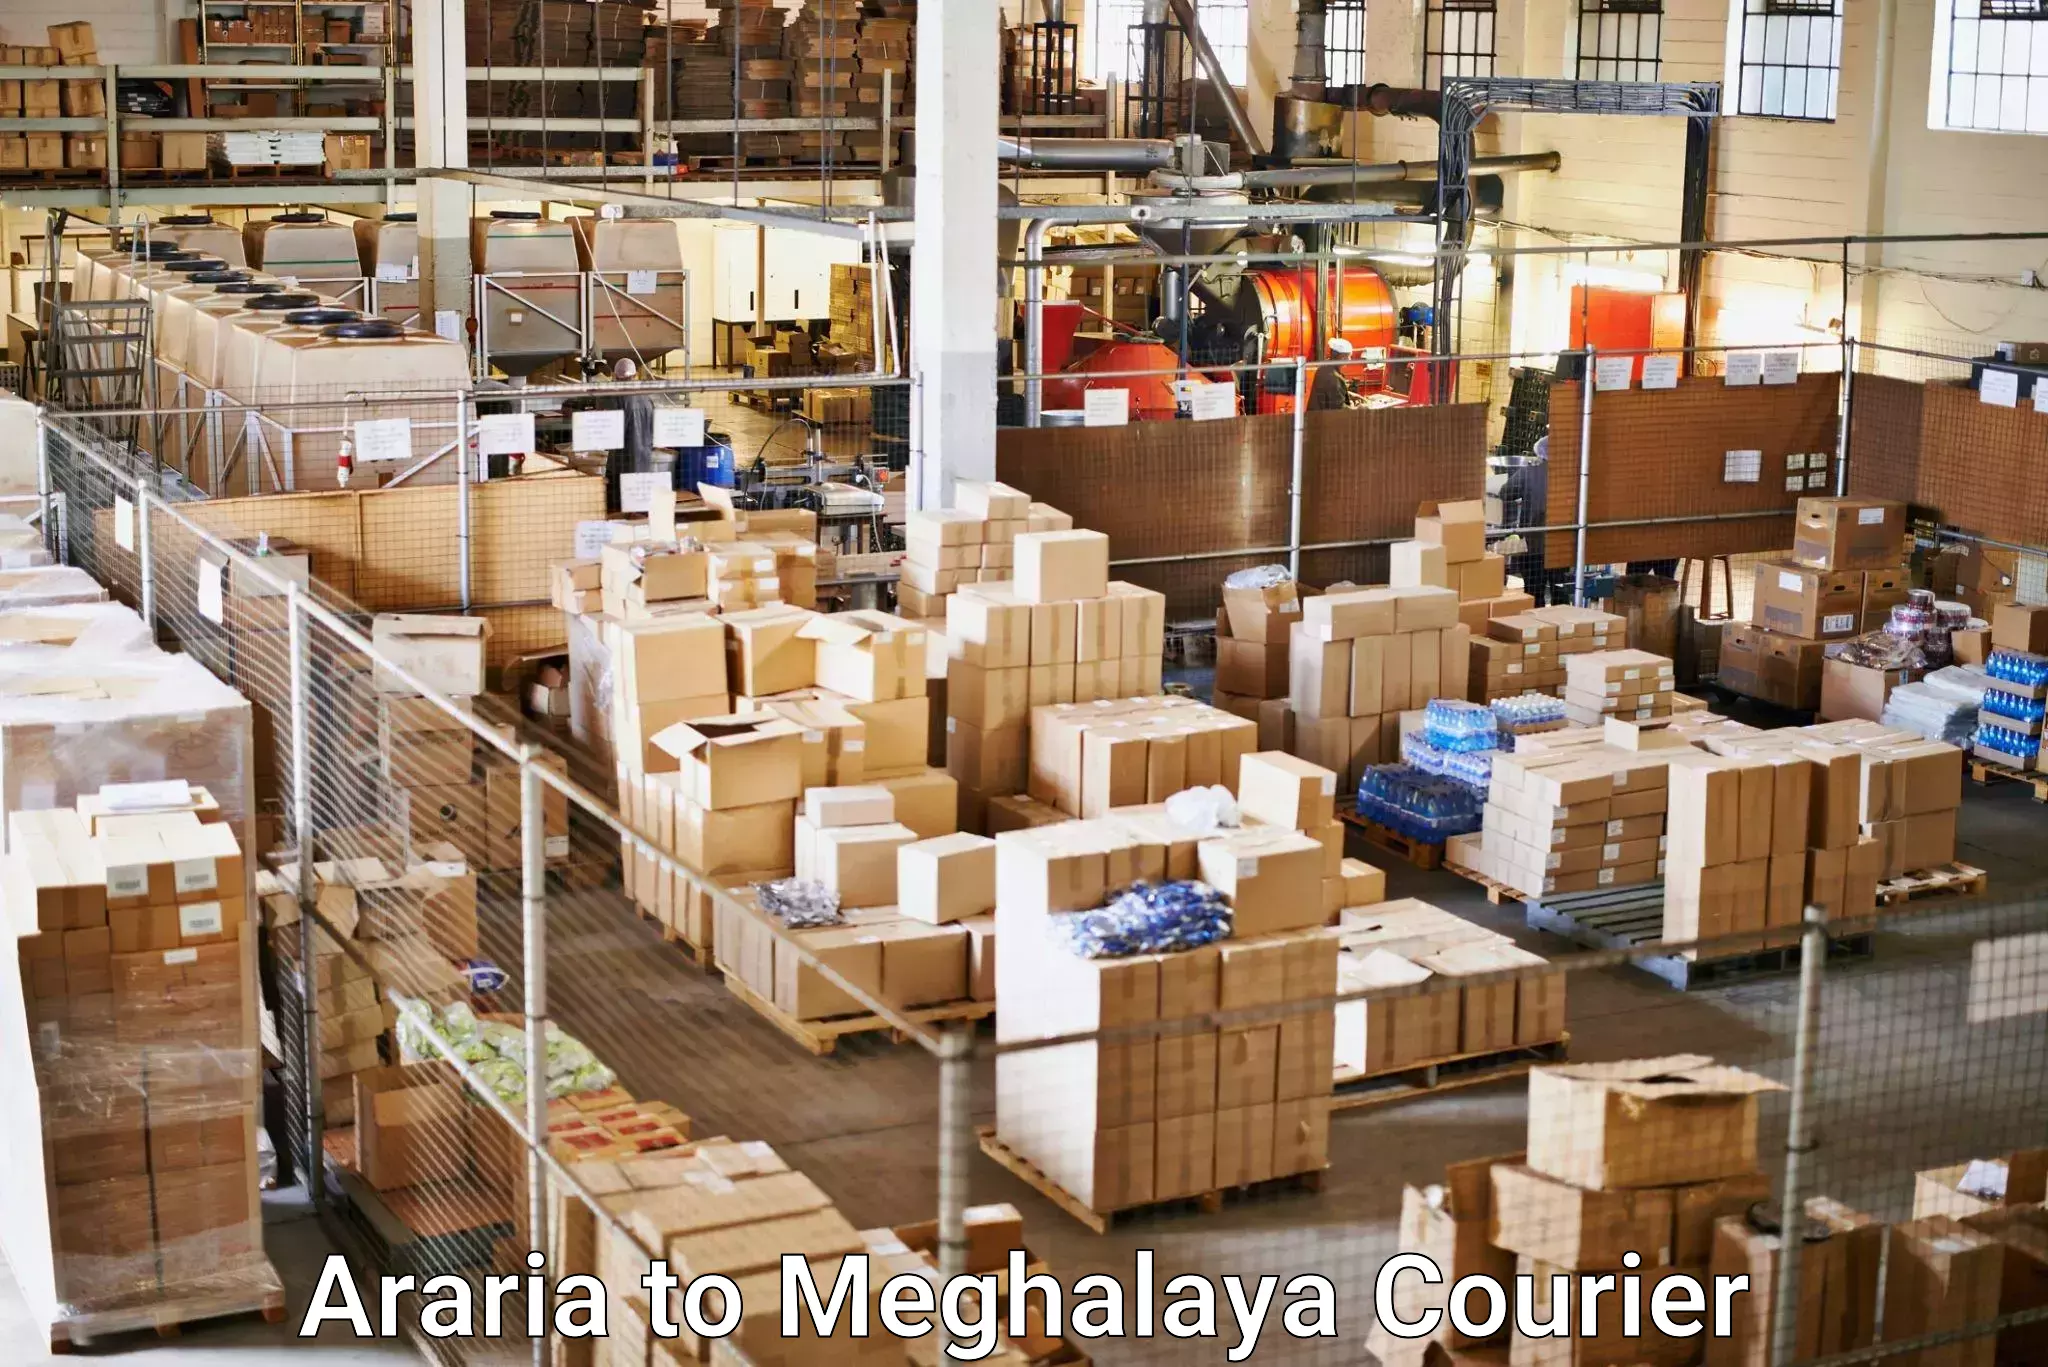 24-hour courier service Araria to Meghalaya